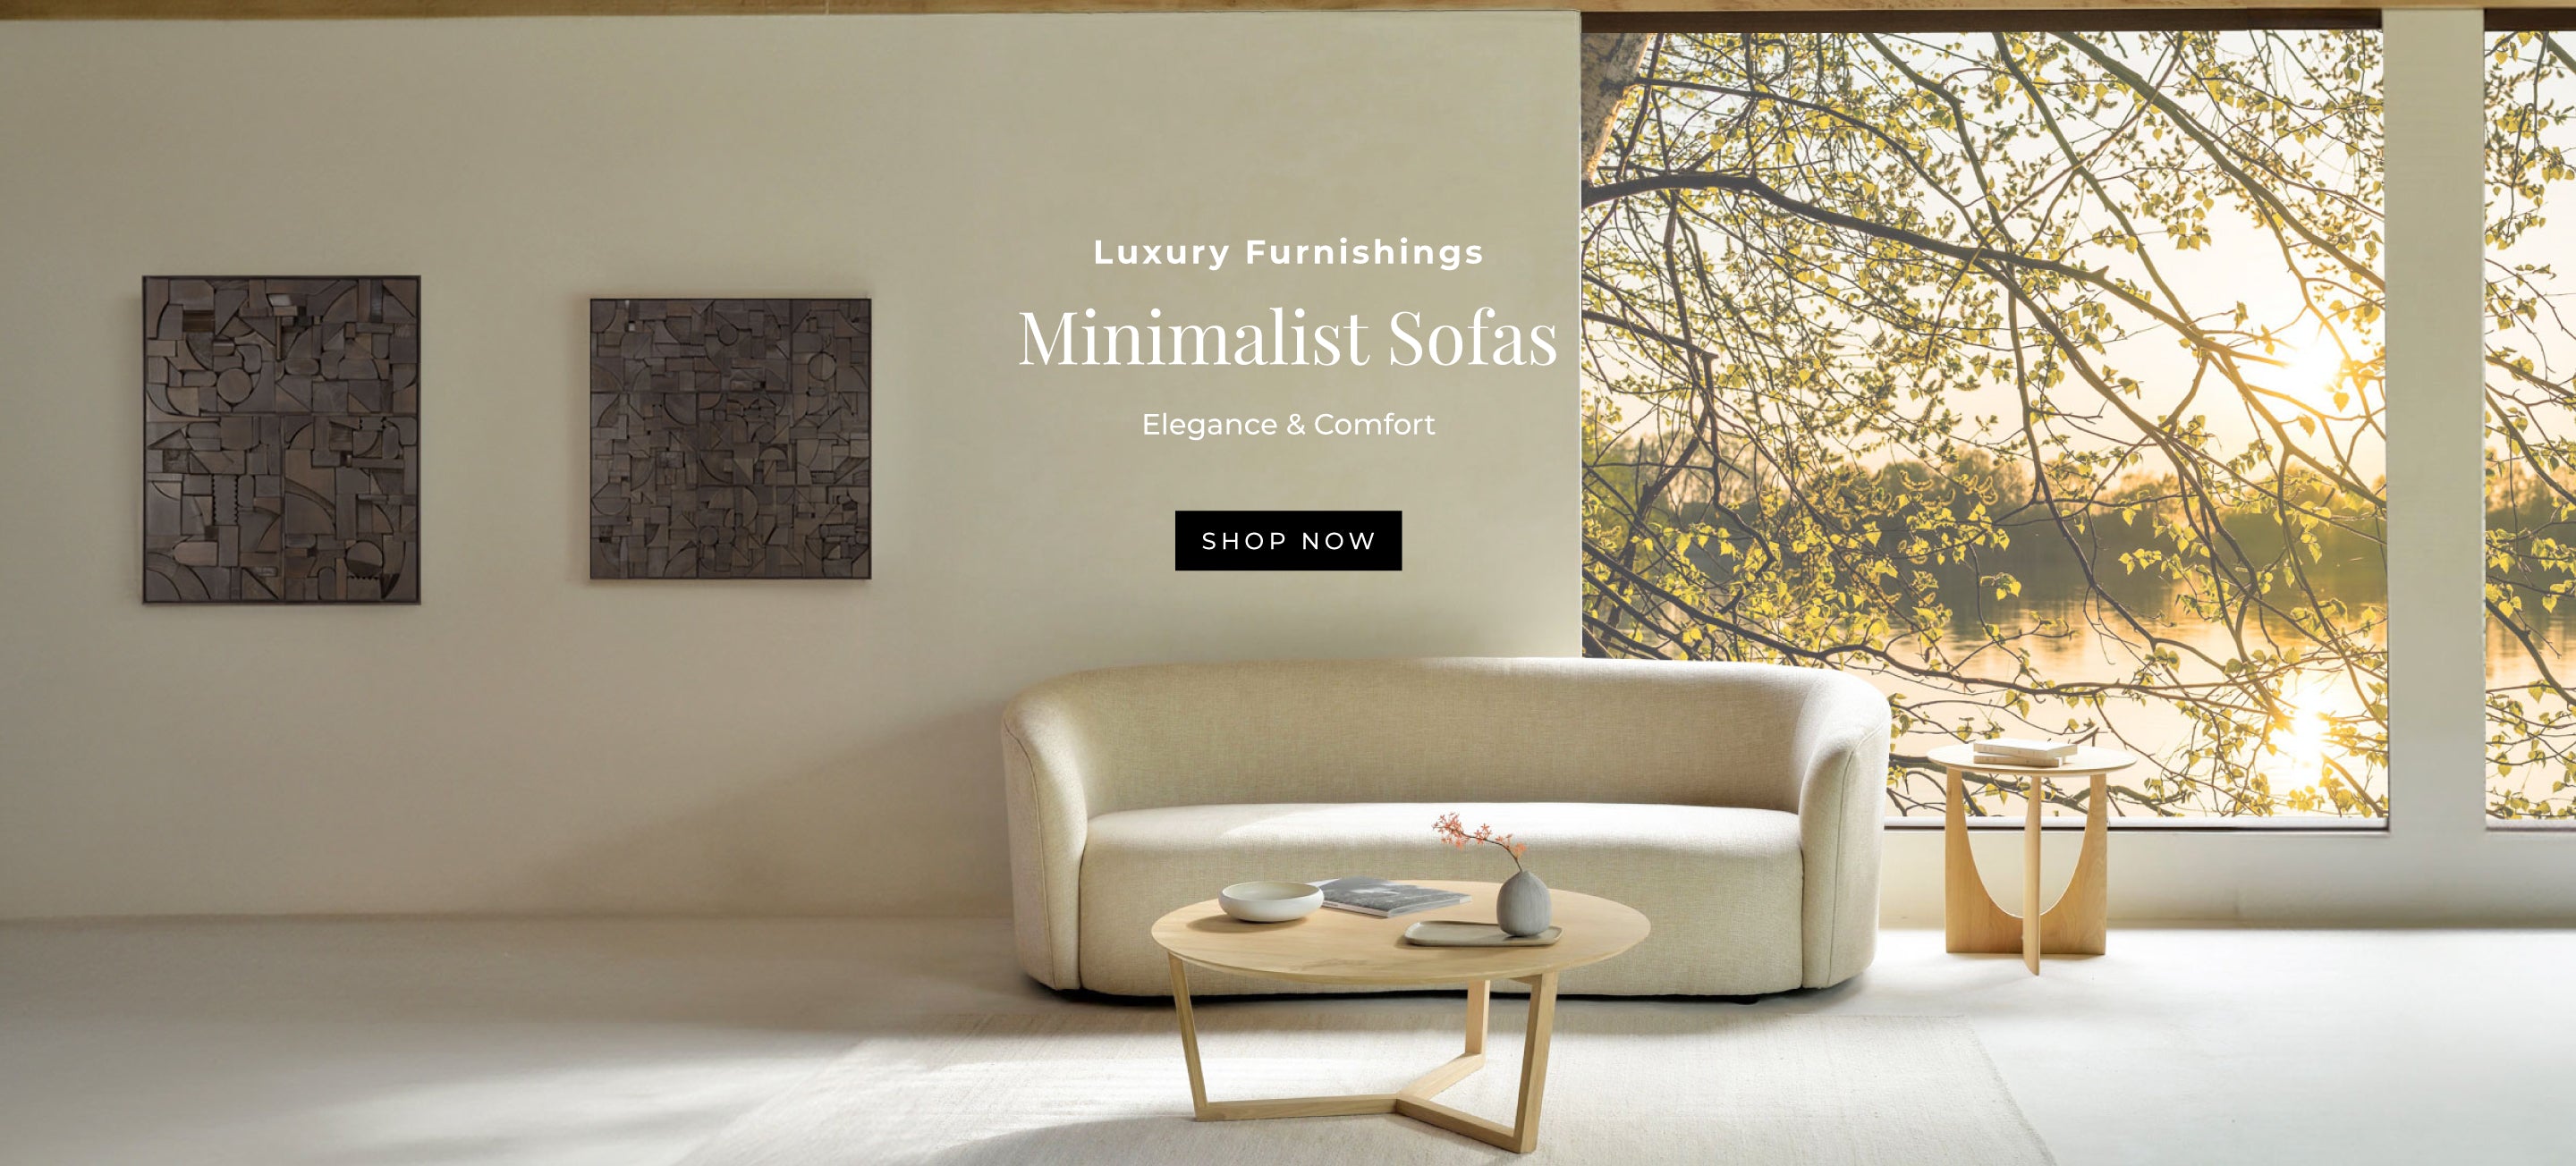 Minimalist Sofa, Ethnicraft, Luxury Furniture, Lighting & Dercor, Modern